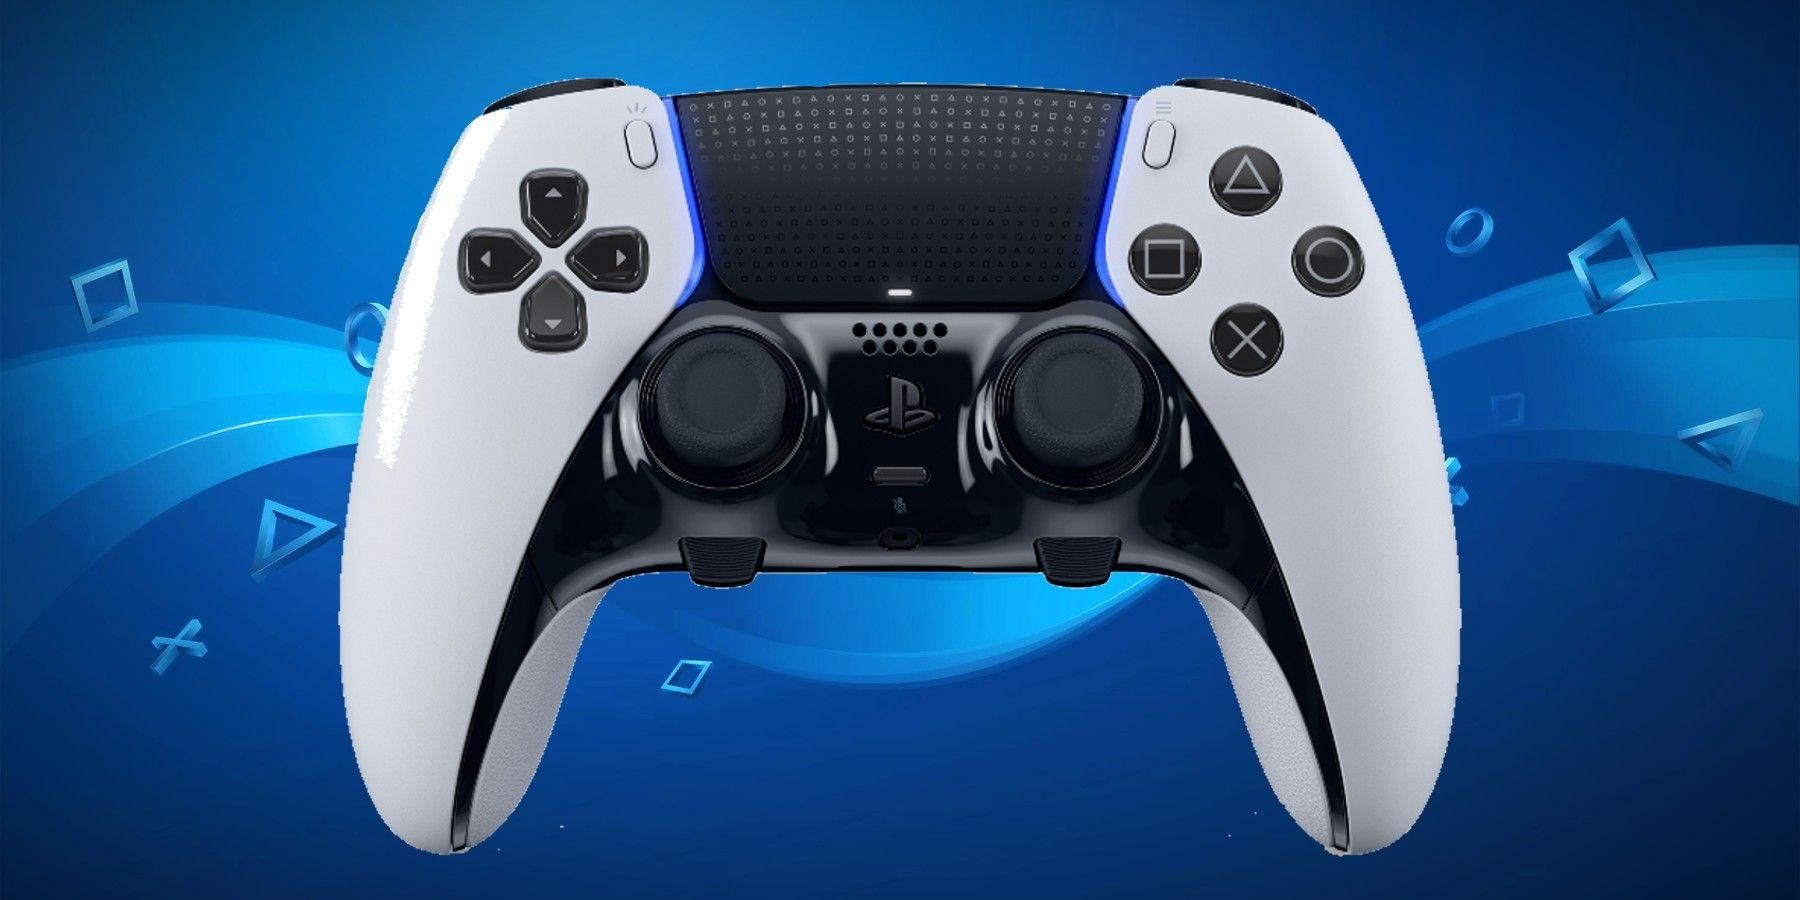 PS5 DualSense Edge Controller Is PlayStation's Take On The Xbox Elite -  GameSpot